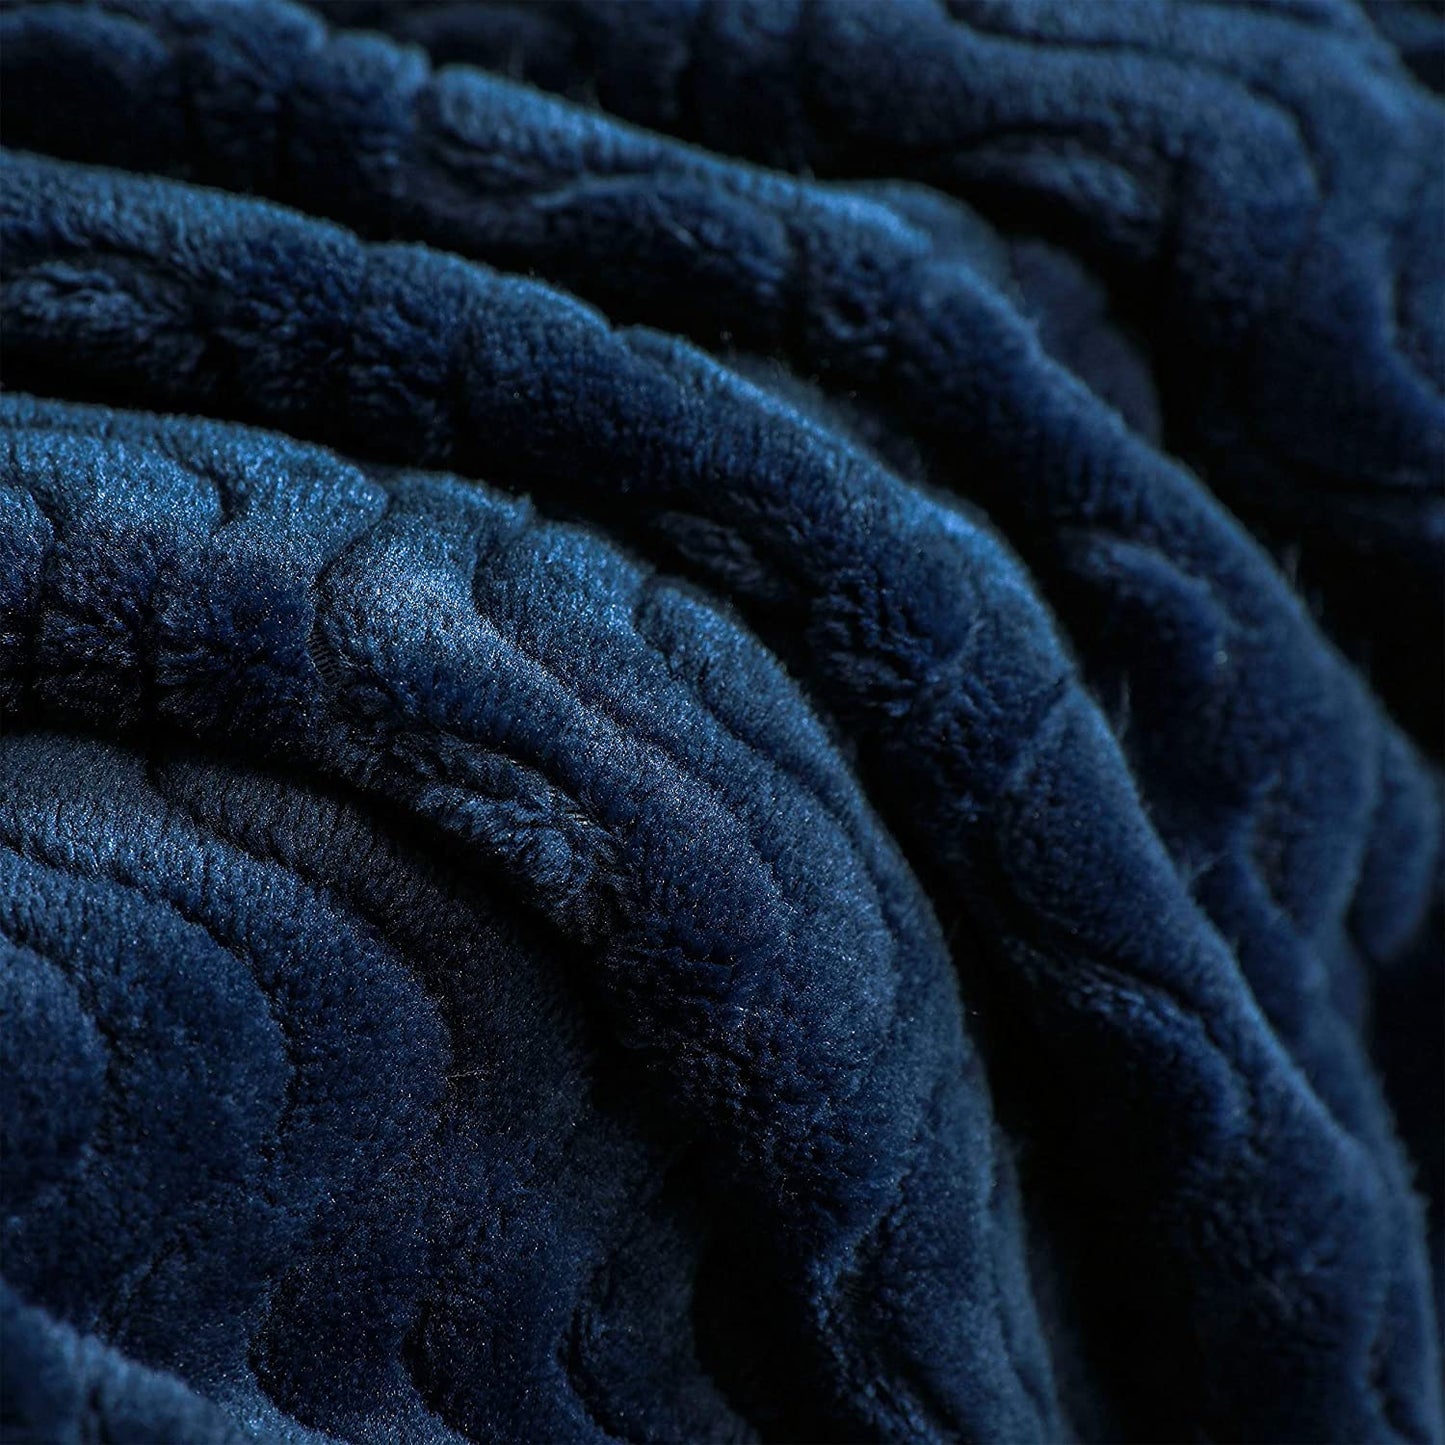 Exclusivo Mezcla Large Flannel Fleece Throw Blanket, Jacquard Weave Wave Pattern (50" x 70", Navy Blue) - Soft, Warm, Lightweight and Decorative